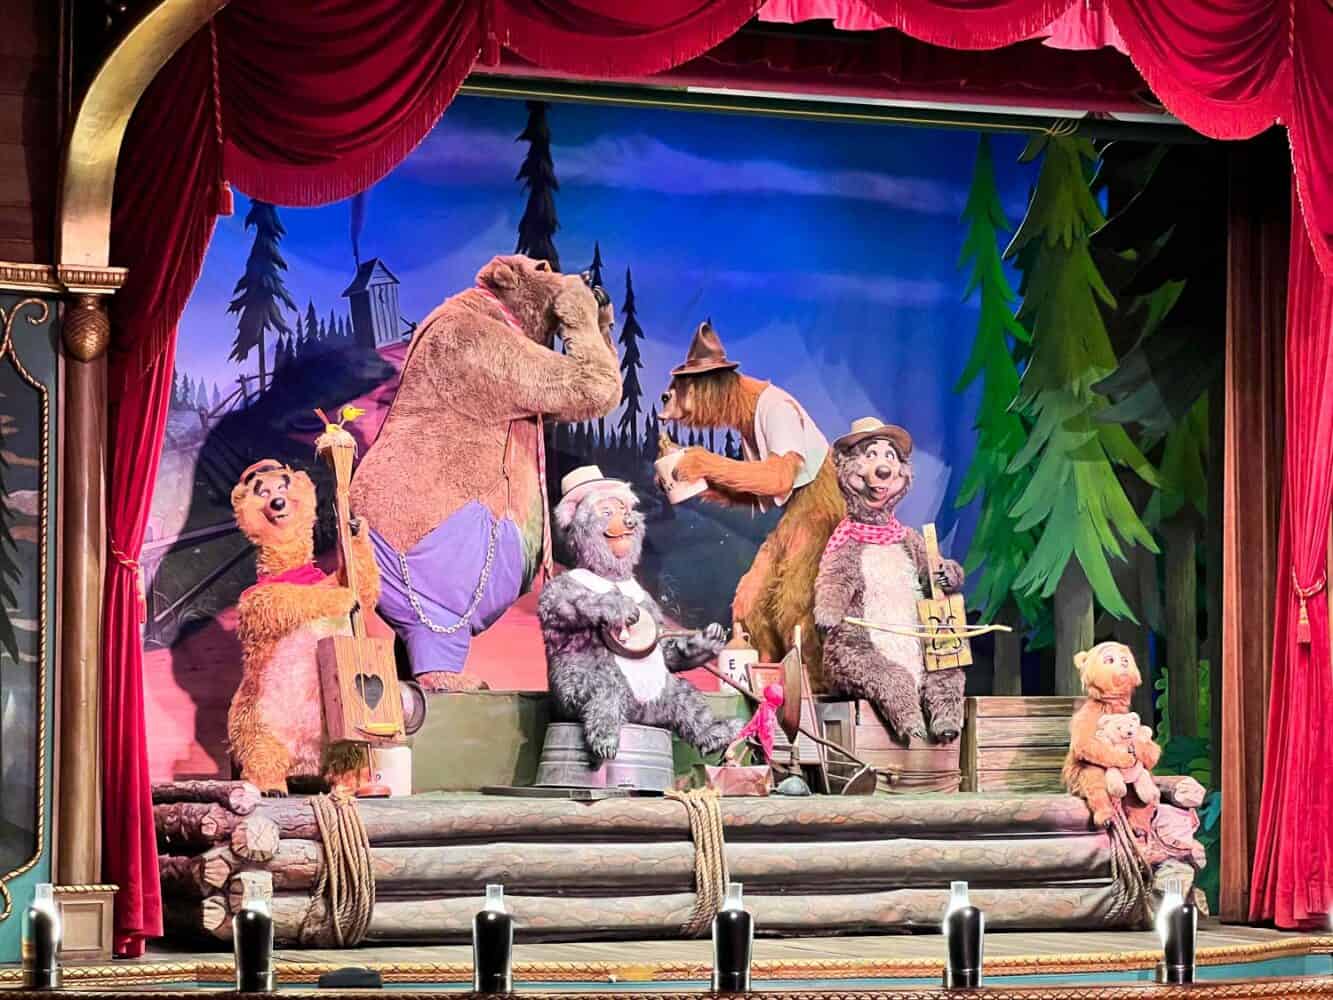 Animatronic Bears at the Country Bear Jamboree show, Magic Kingdom, Disney World